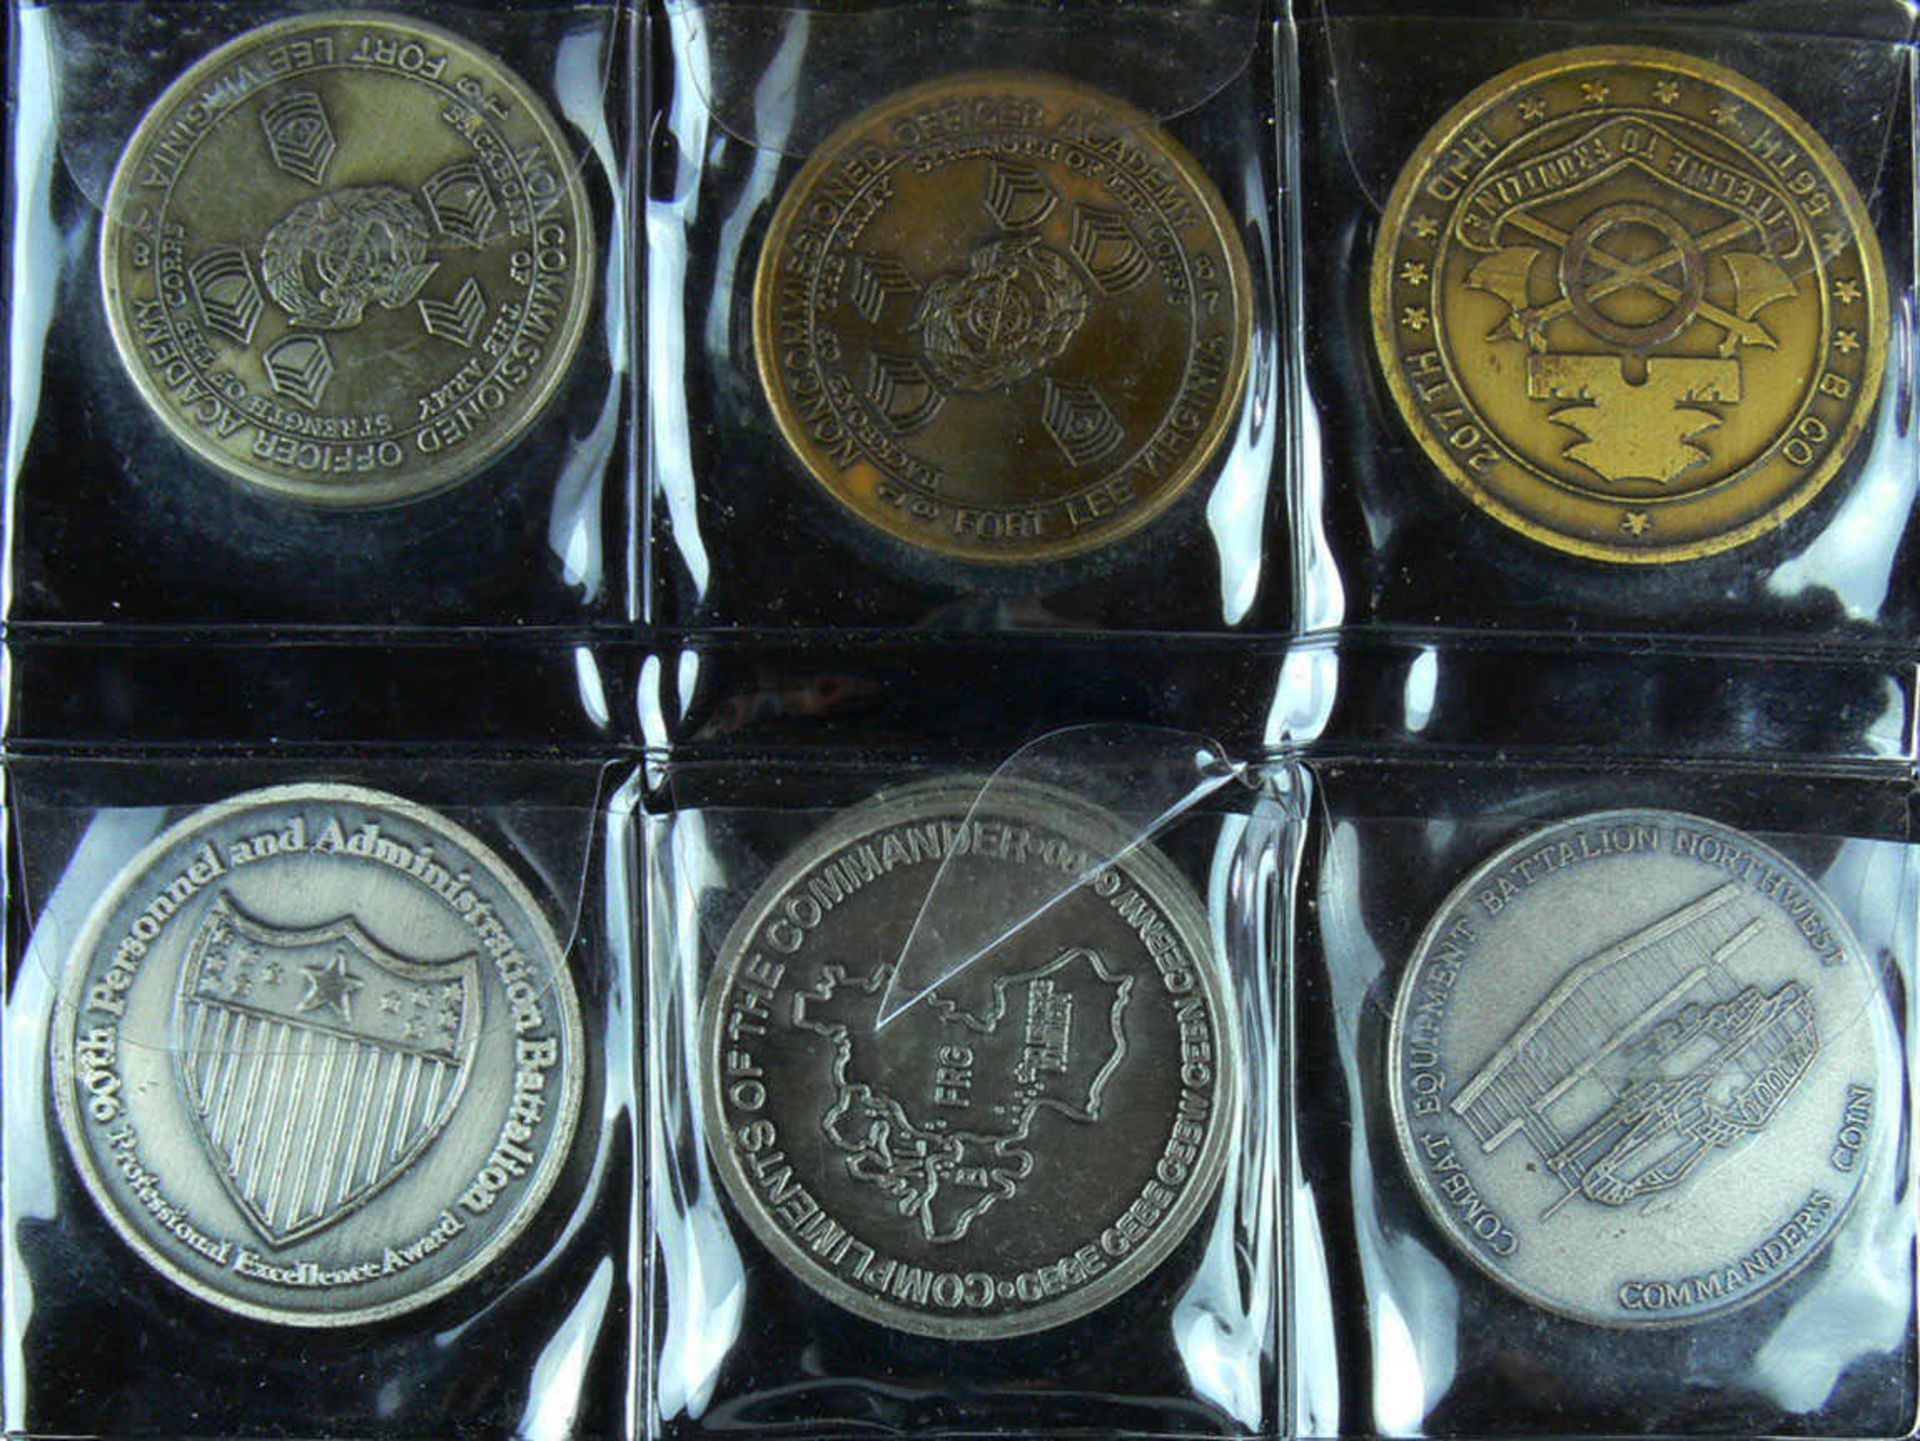 Lot 7 Medaillen US-Army, bestehend aus: 1. 90th Personal and Administration Battalion, 2. - Bild 2 aus 2